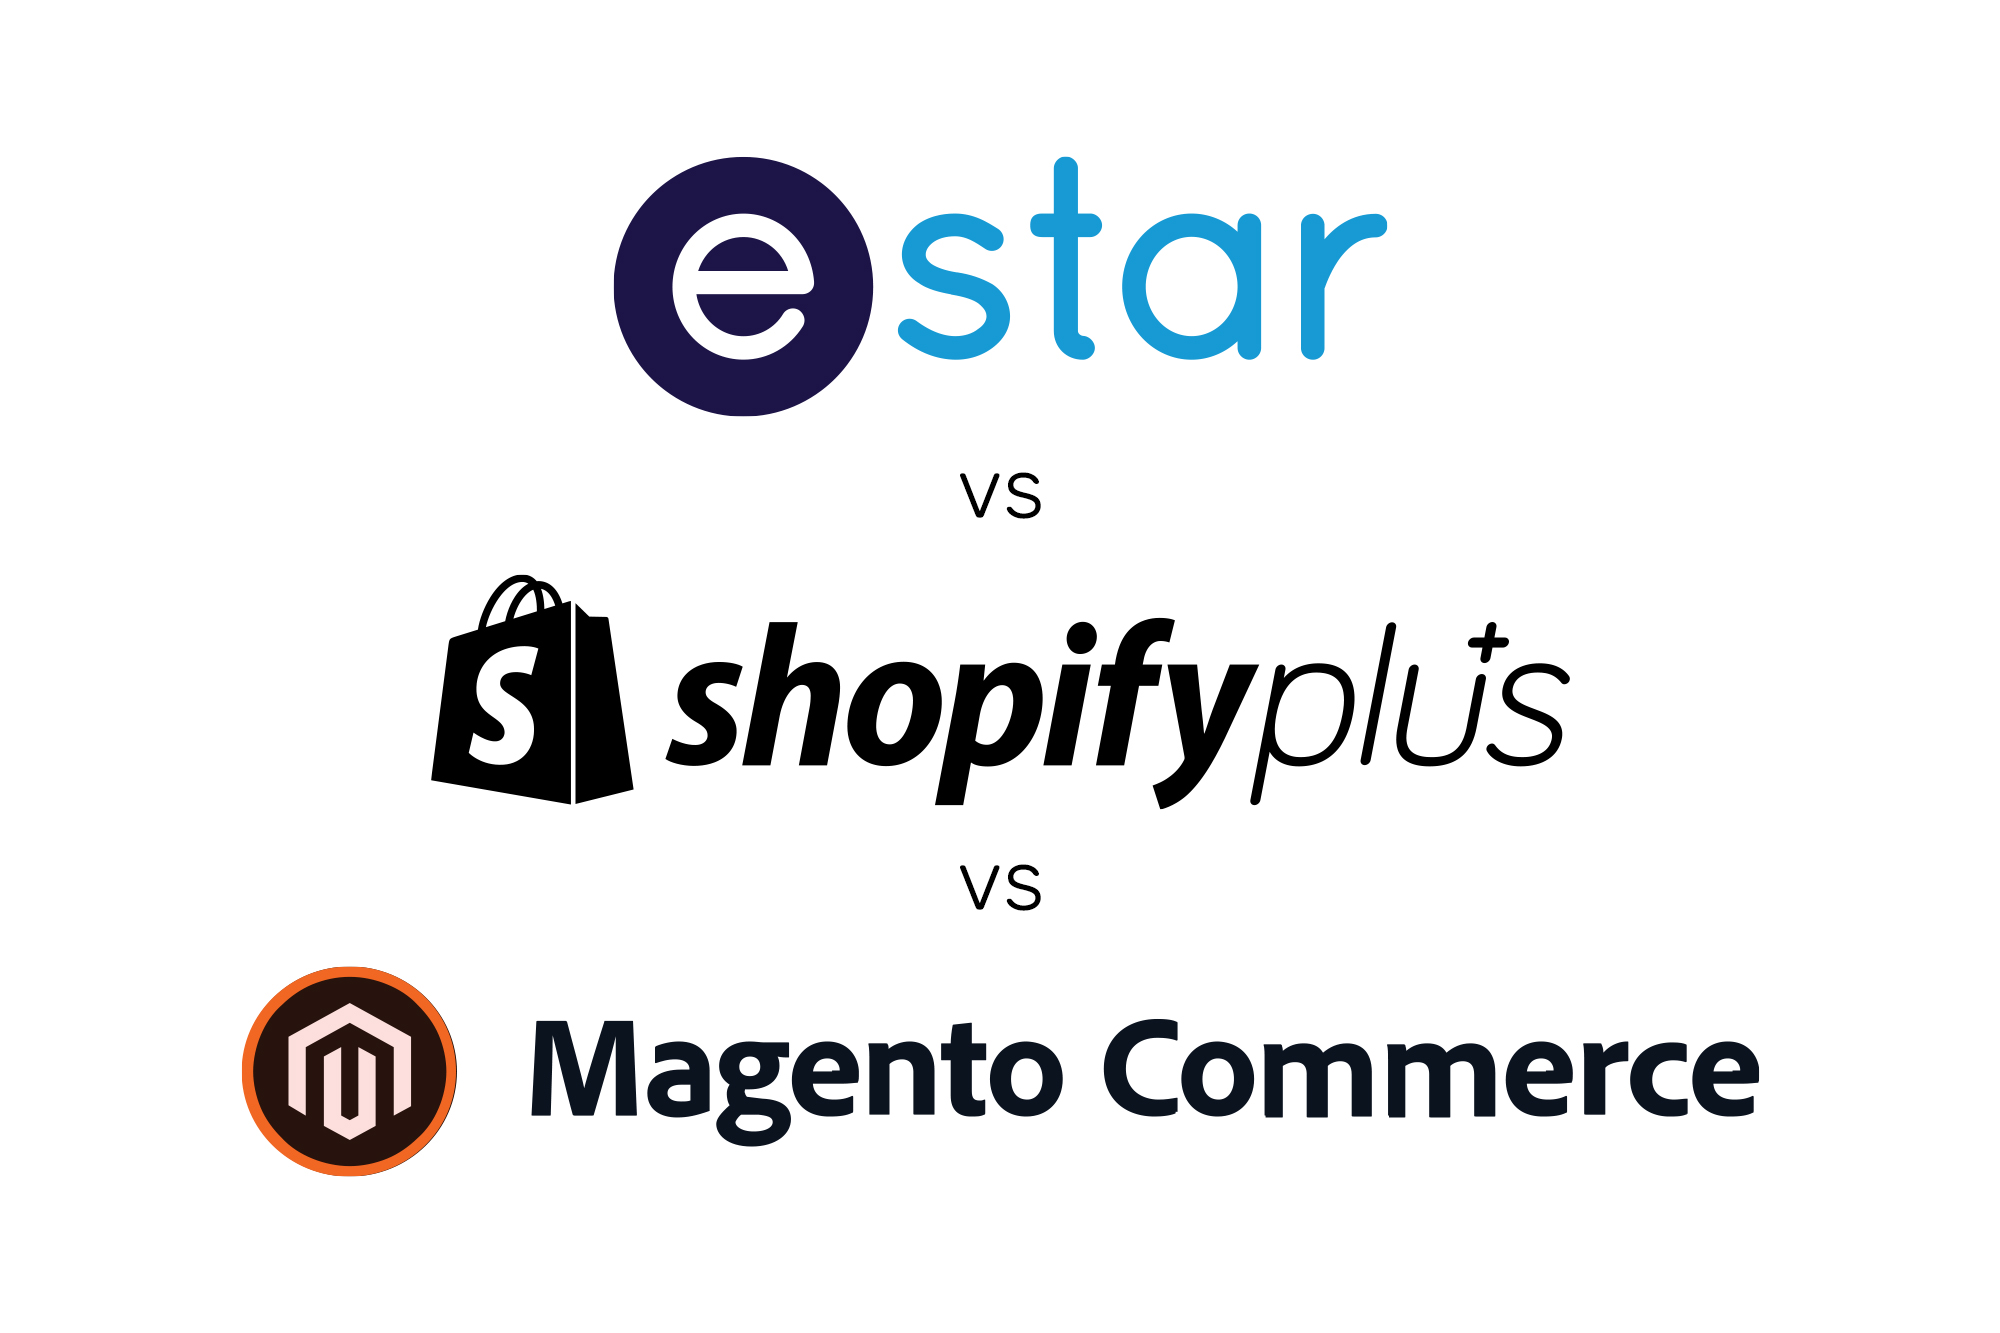 eStar vs Shopify Plus vs Magento Commerce